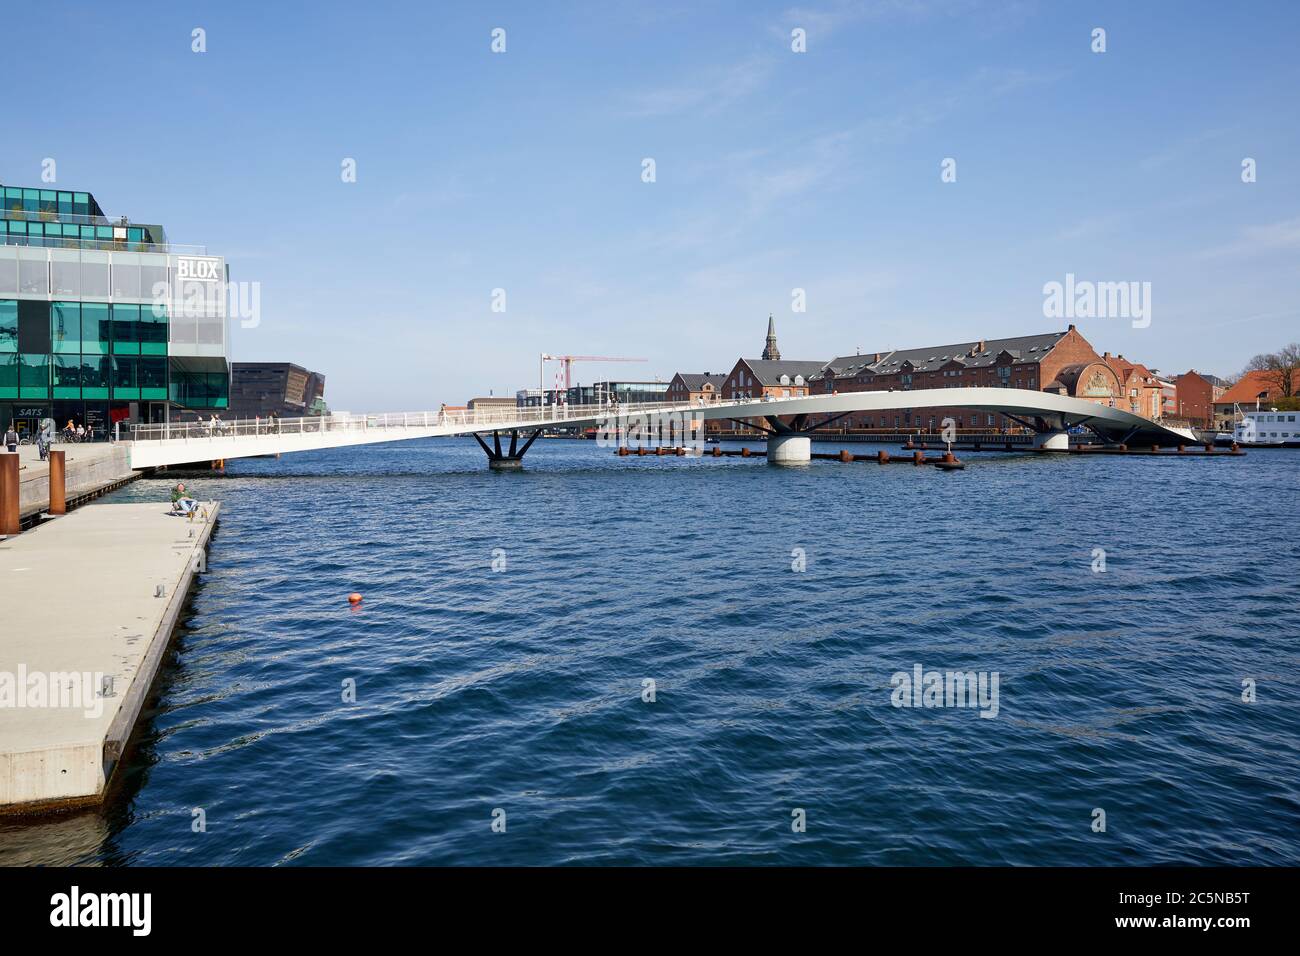 Lille Langebro, foot- and bicycle bridge across Copenhagen Harbour, designed by WilkinsonEyre and Urban Agency (2019); Denmark Stock Photo